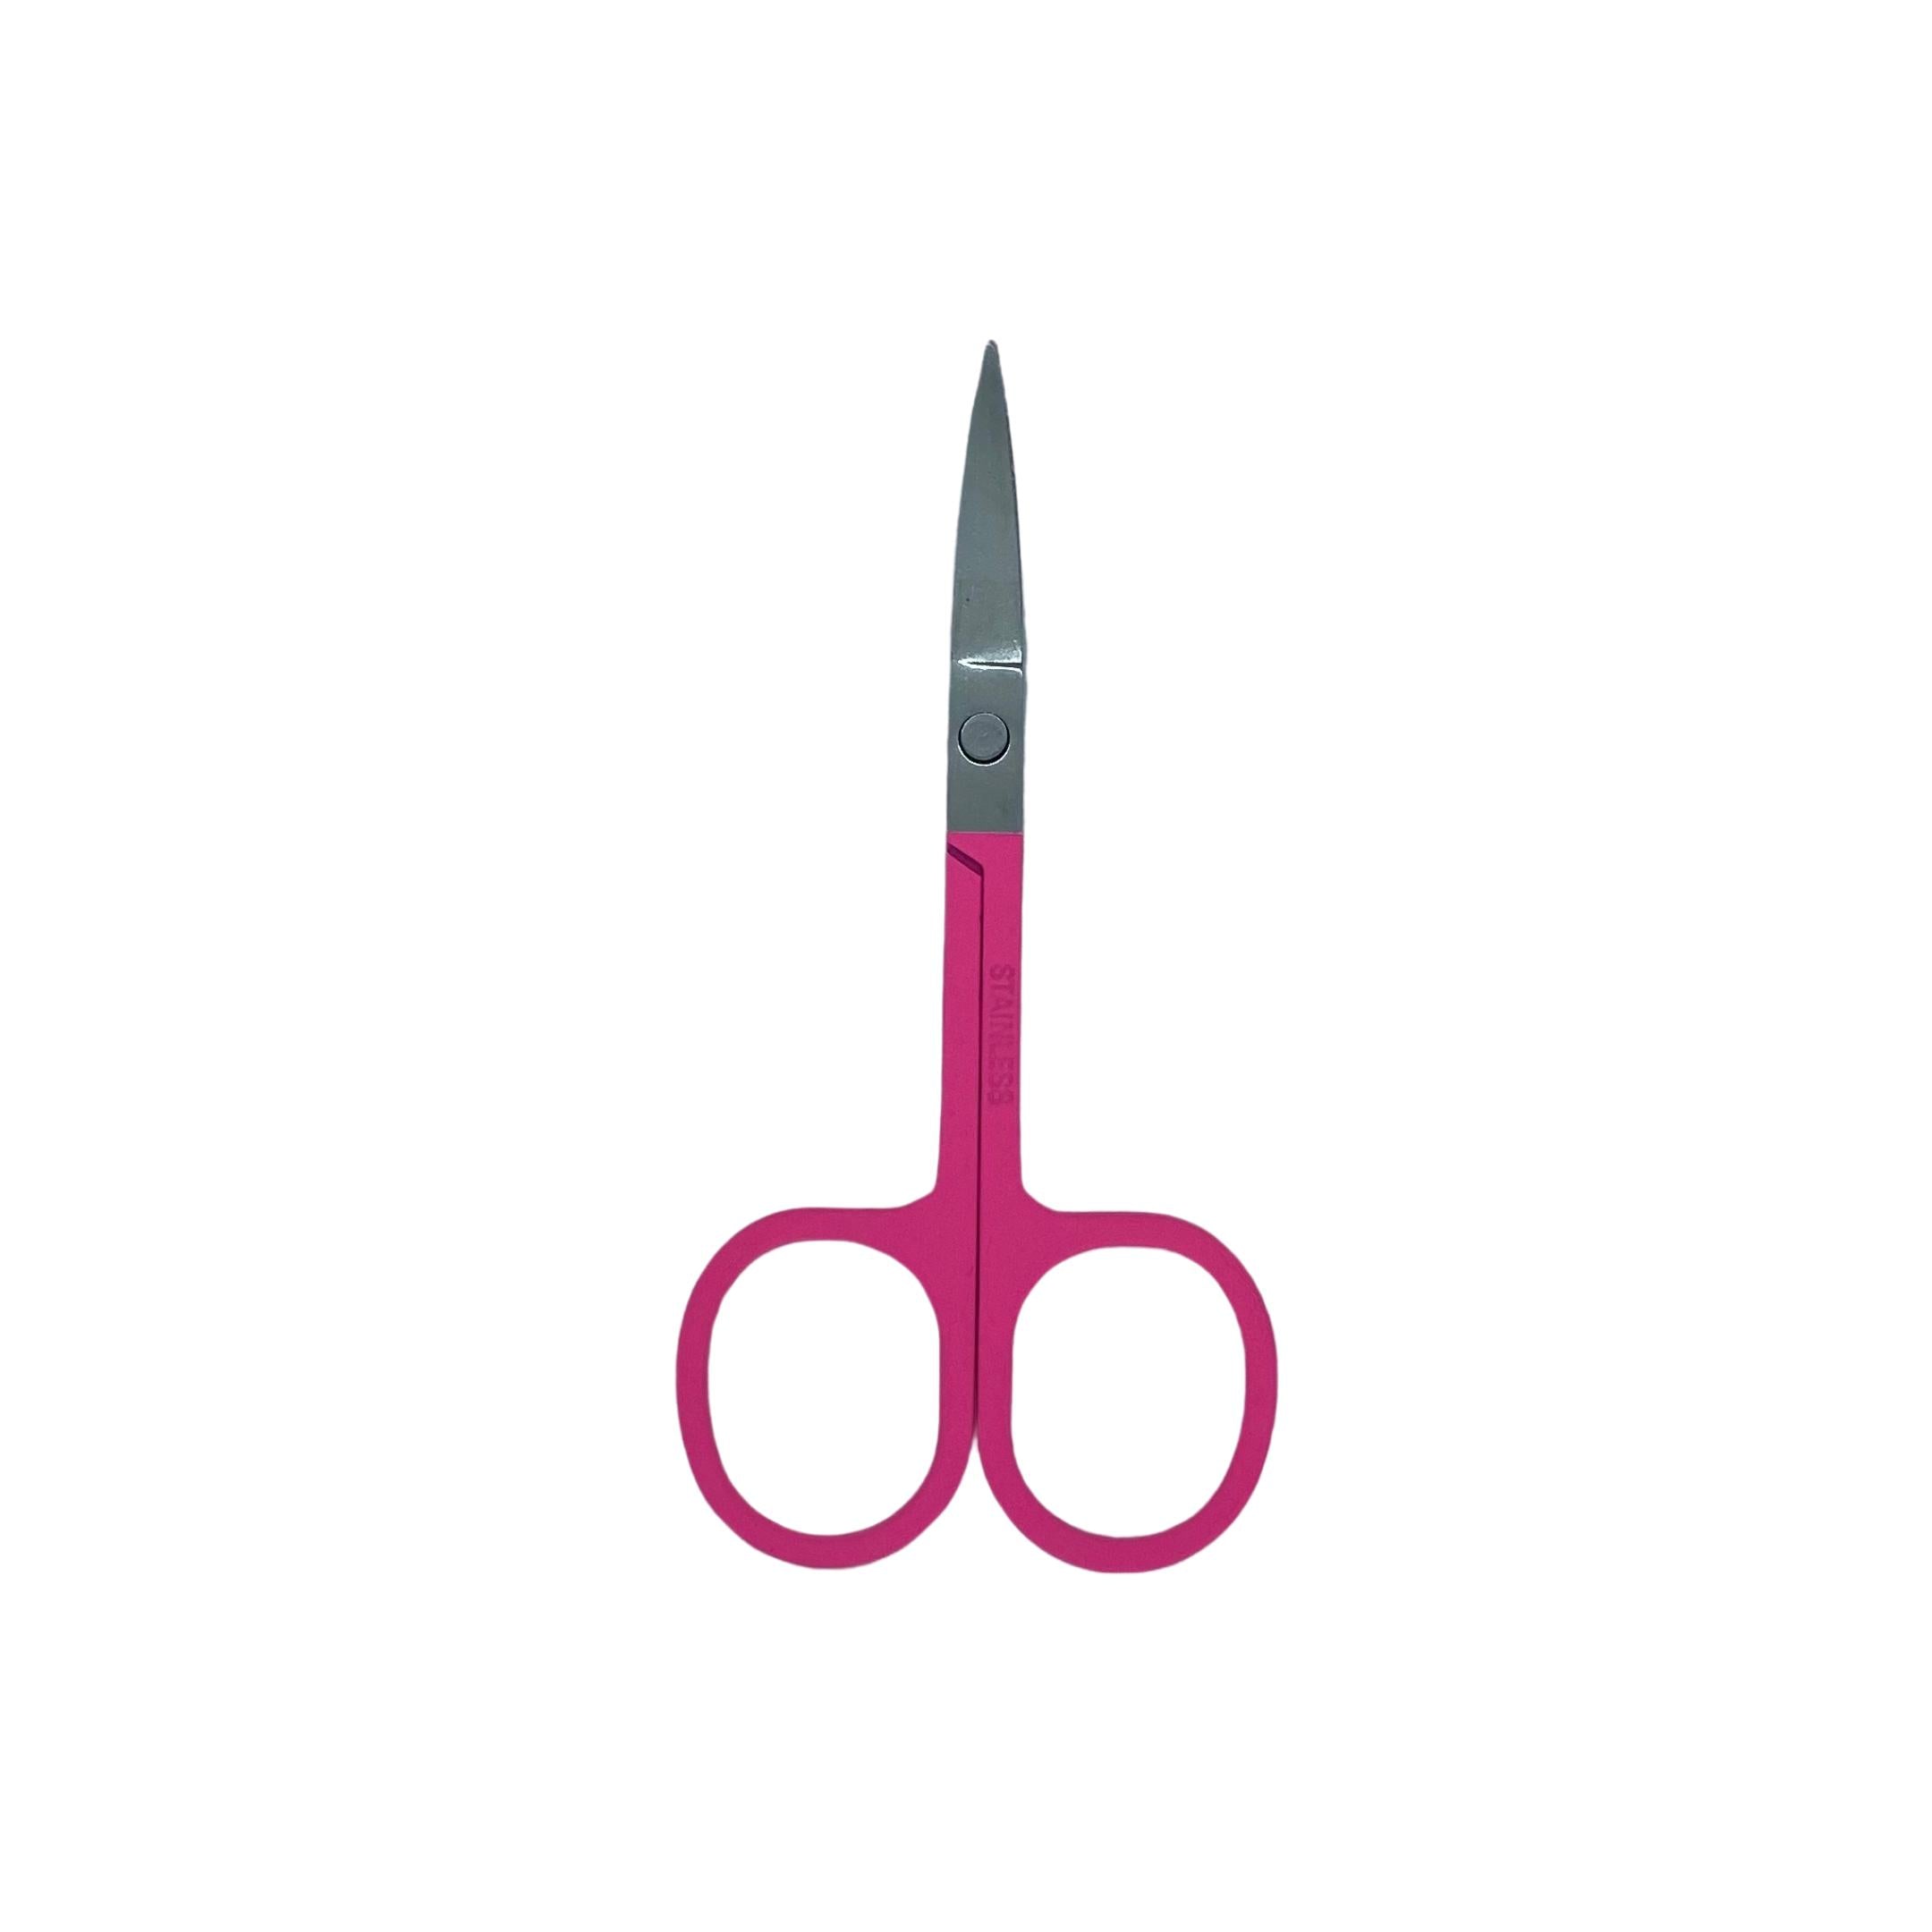 Mini Scissors – The Self Care Beauty Bar